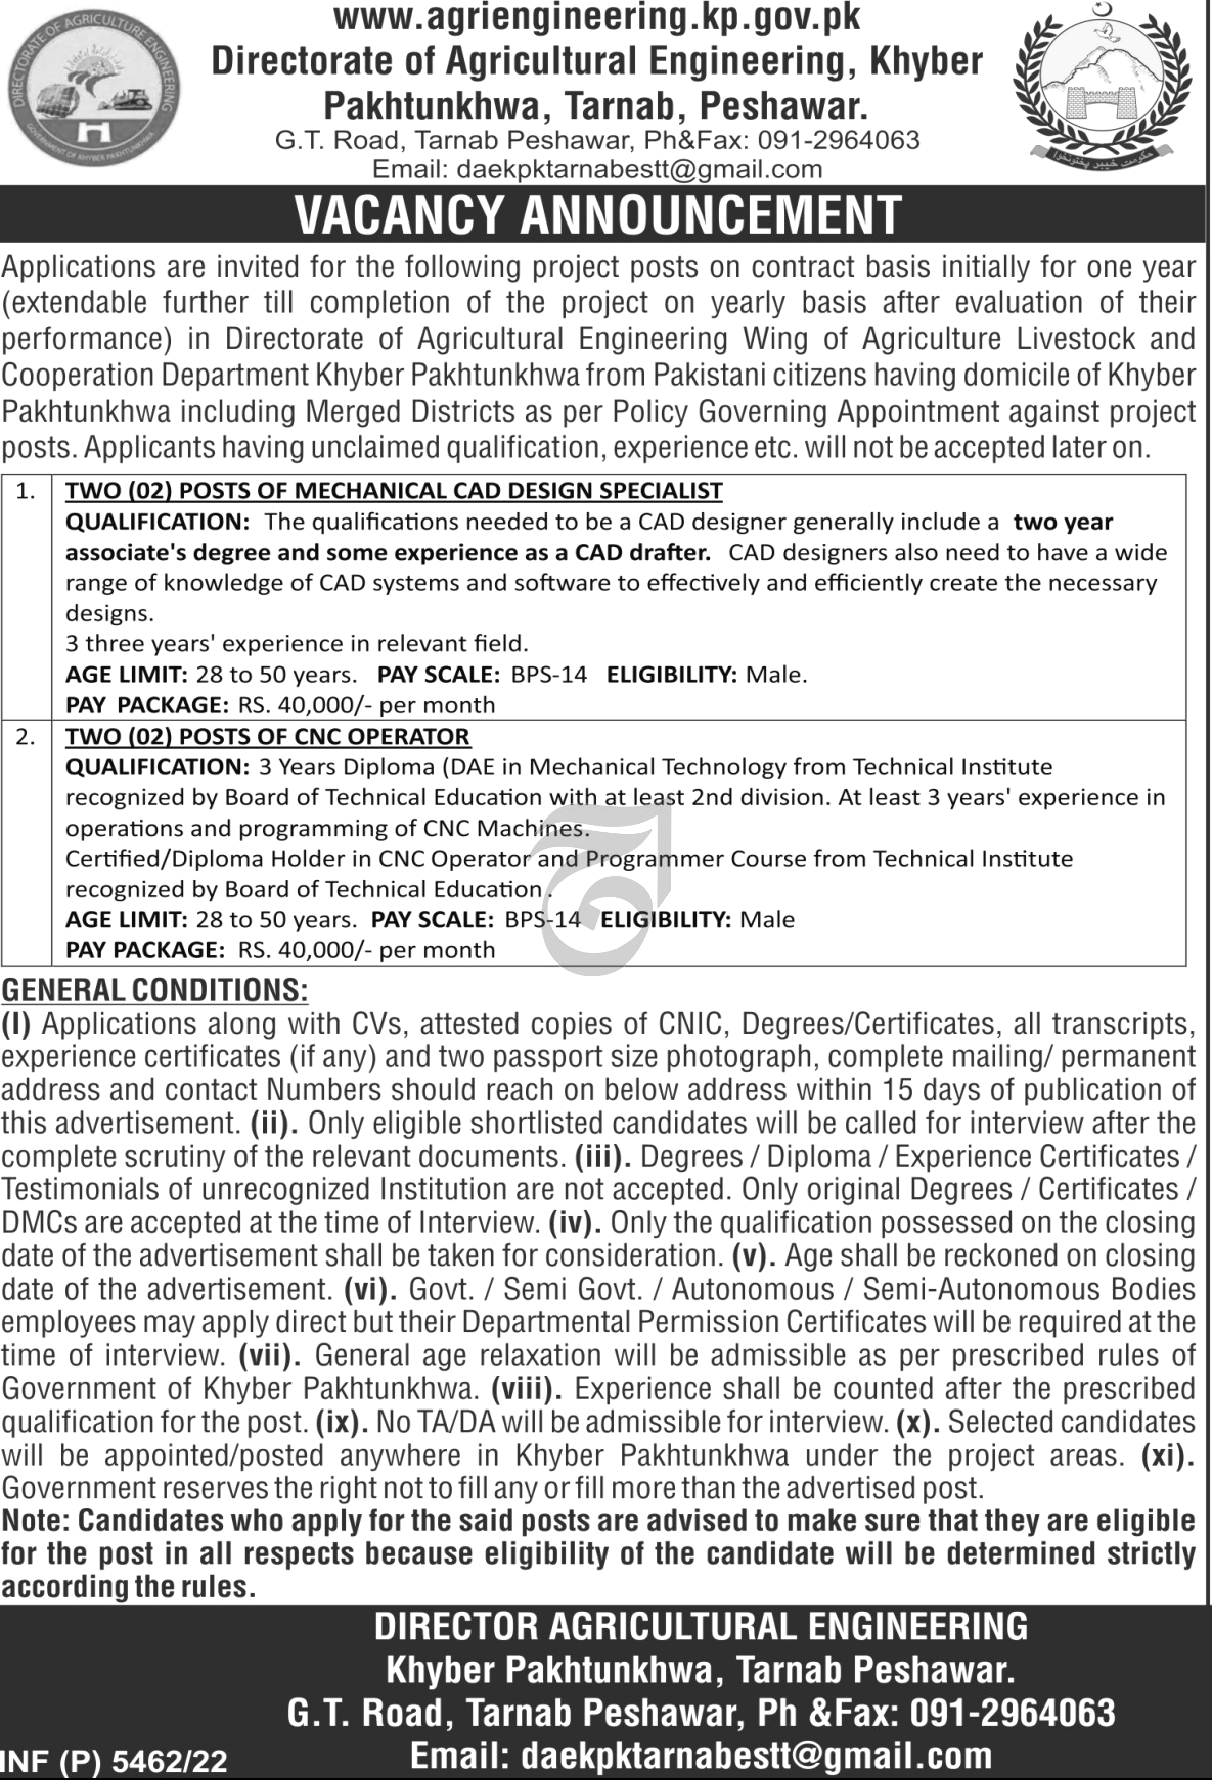 Directorate of Agricultural Engineering KPK Govt Jobs